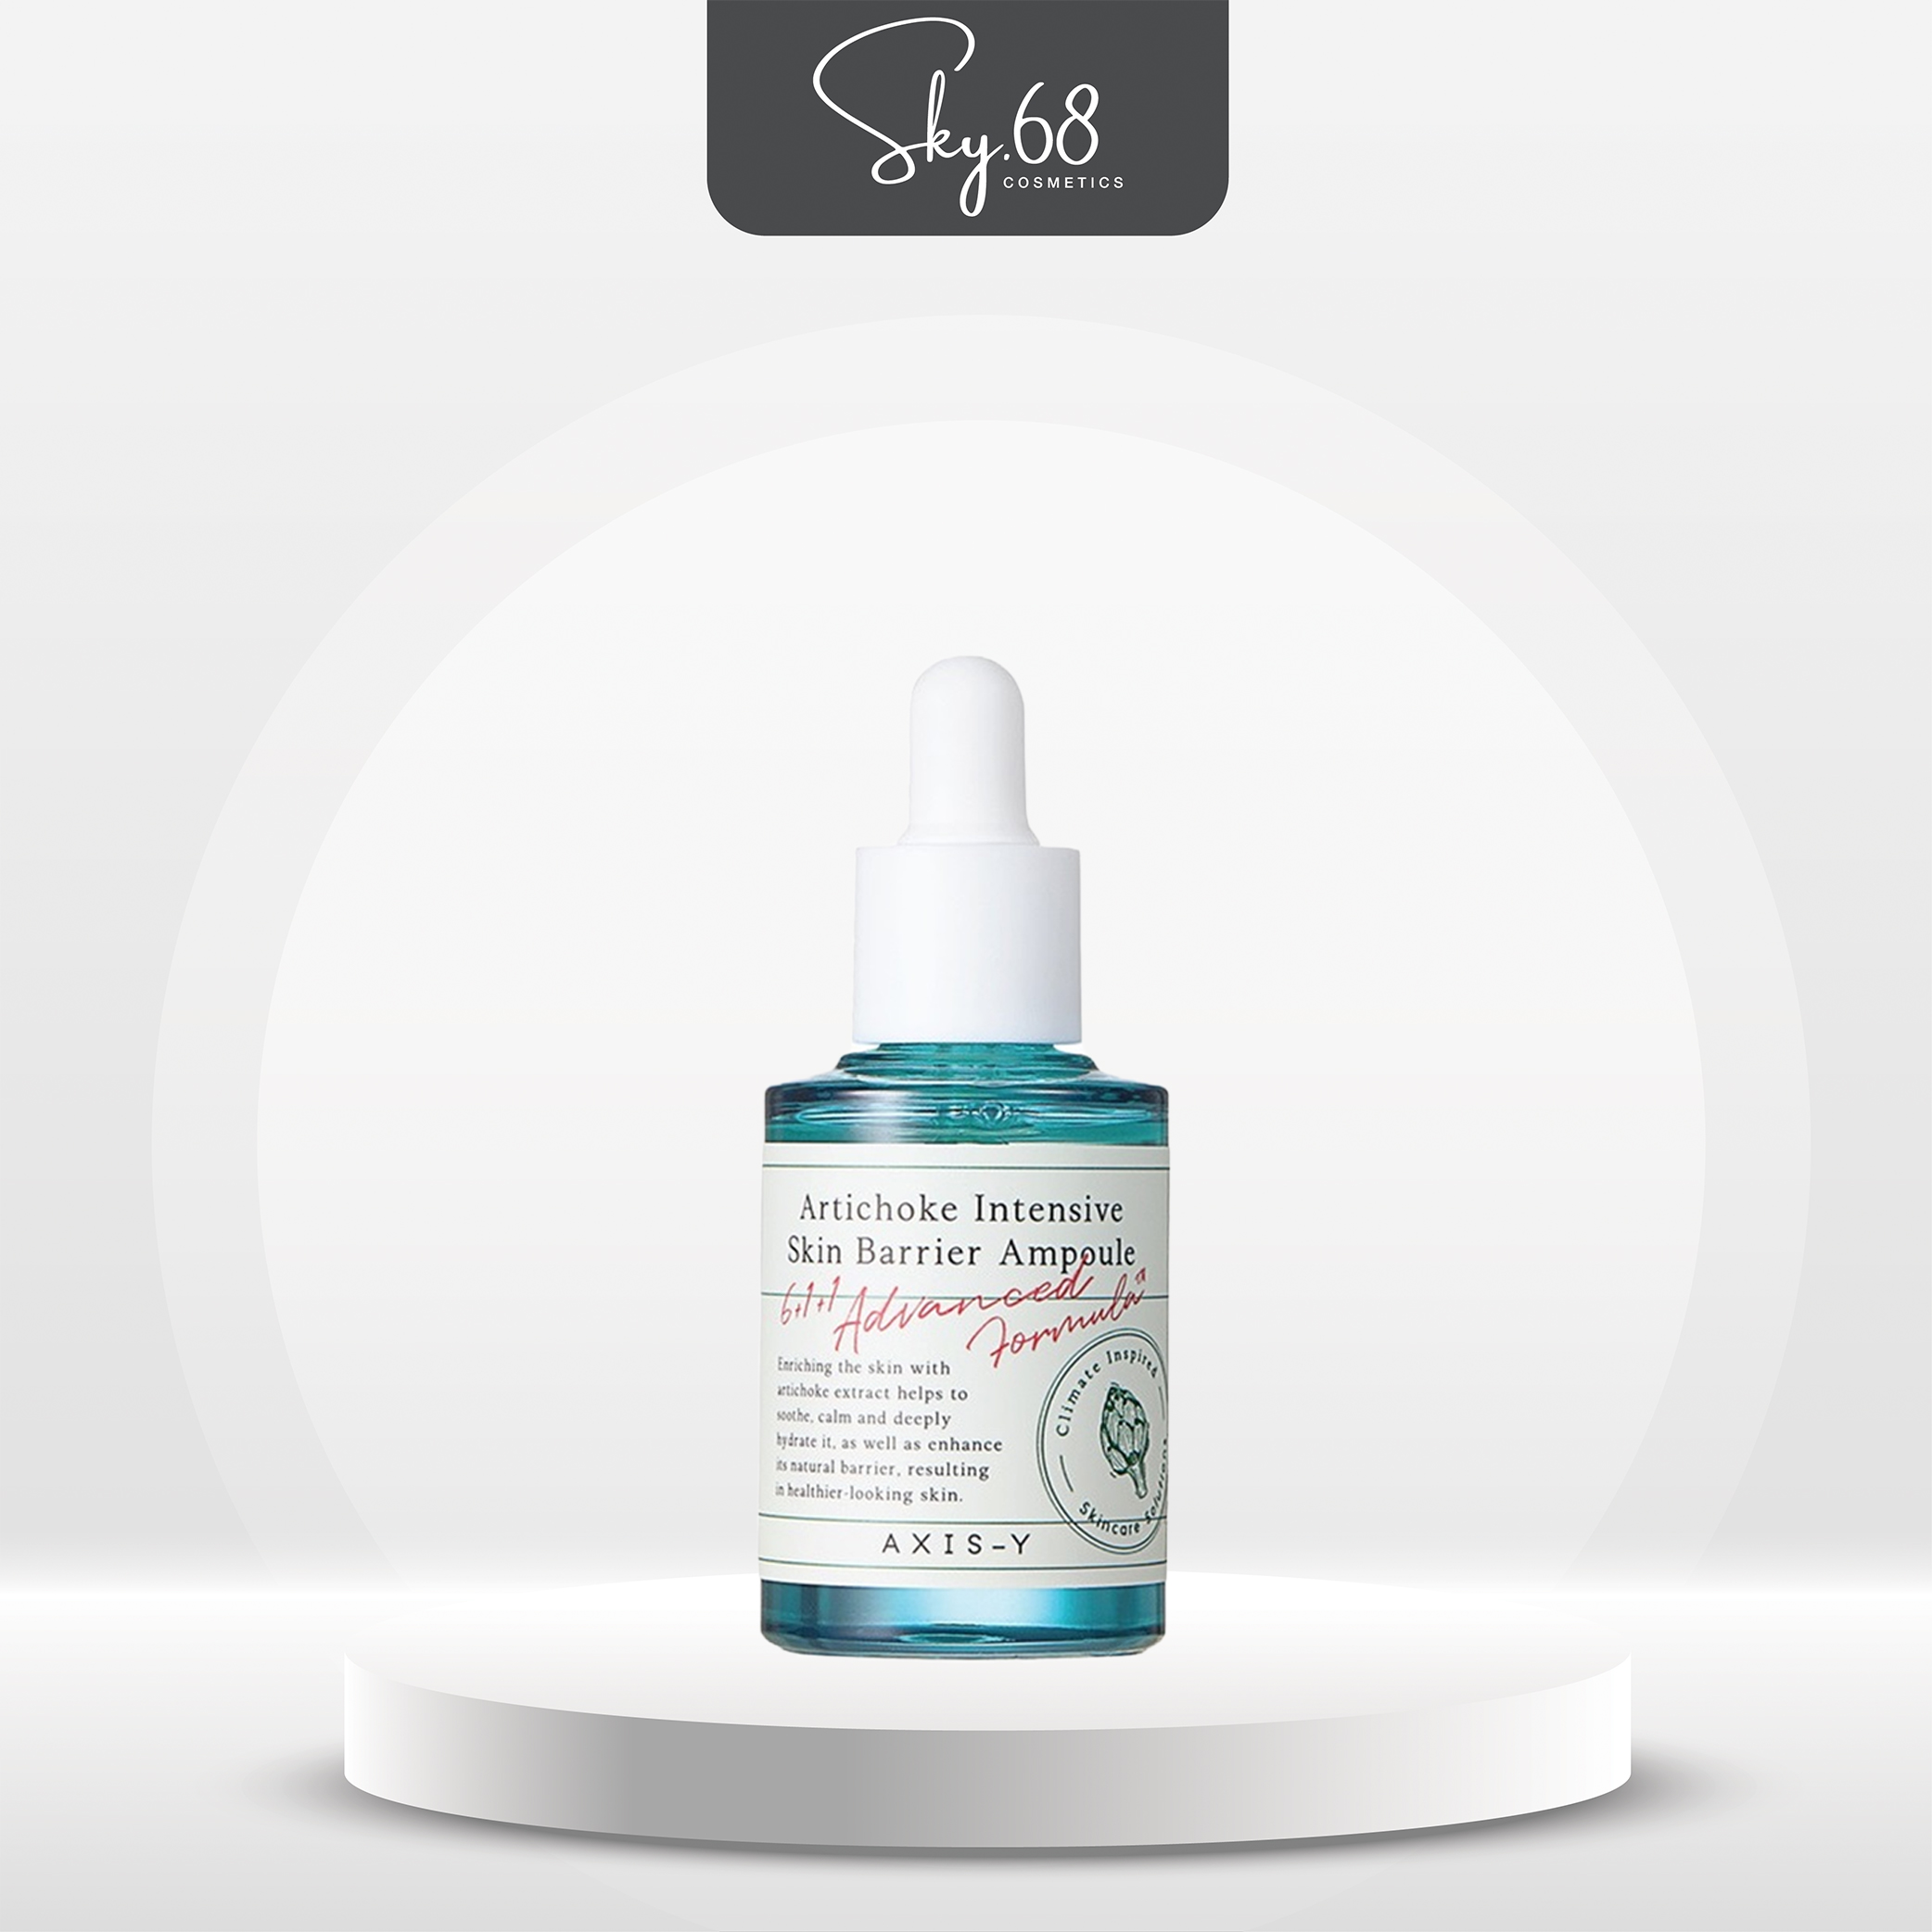 Serum dưỡng ẩm và phục hồi da AXIS-Y Artichoke Intensive Skin Barrier Ampoule 30ml